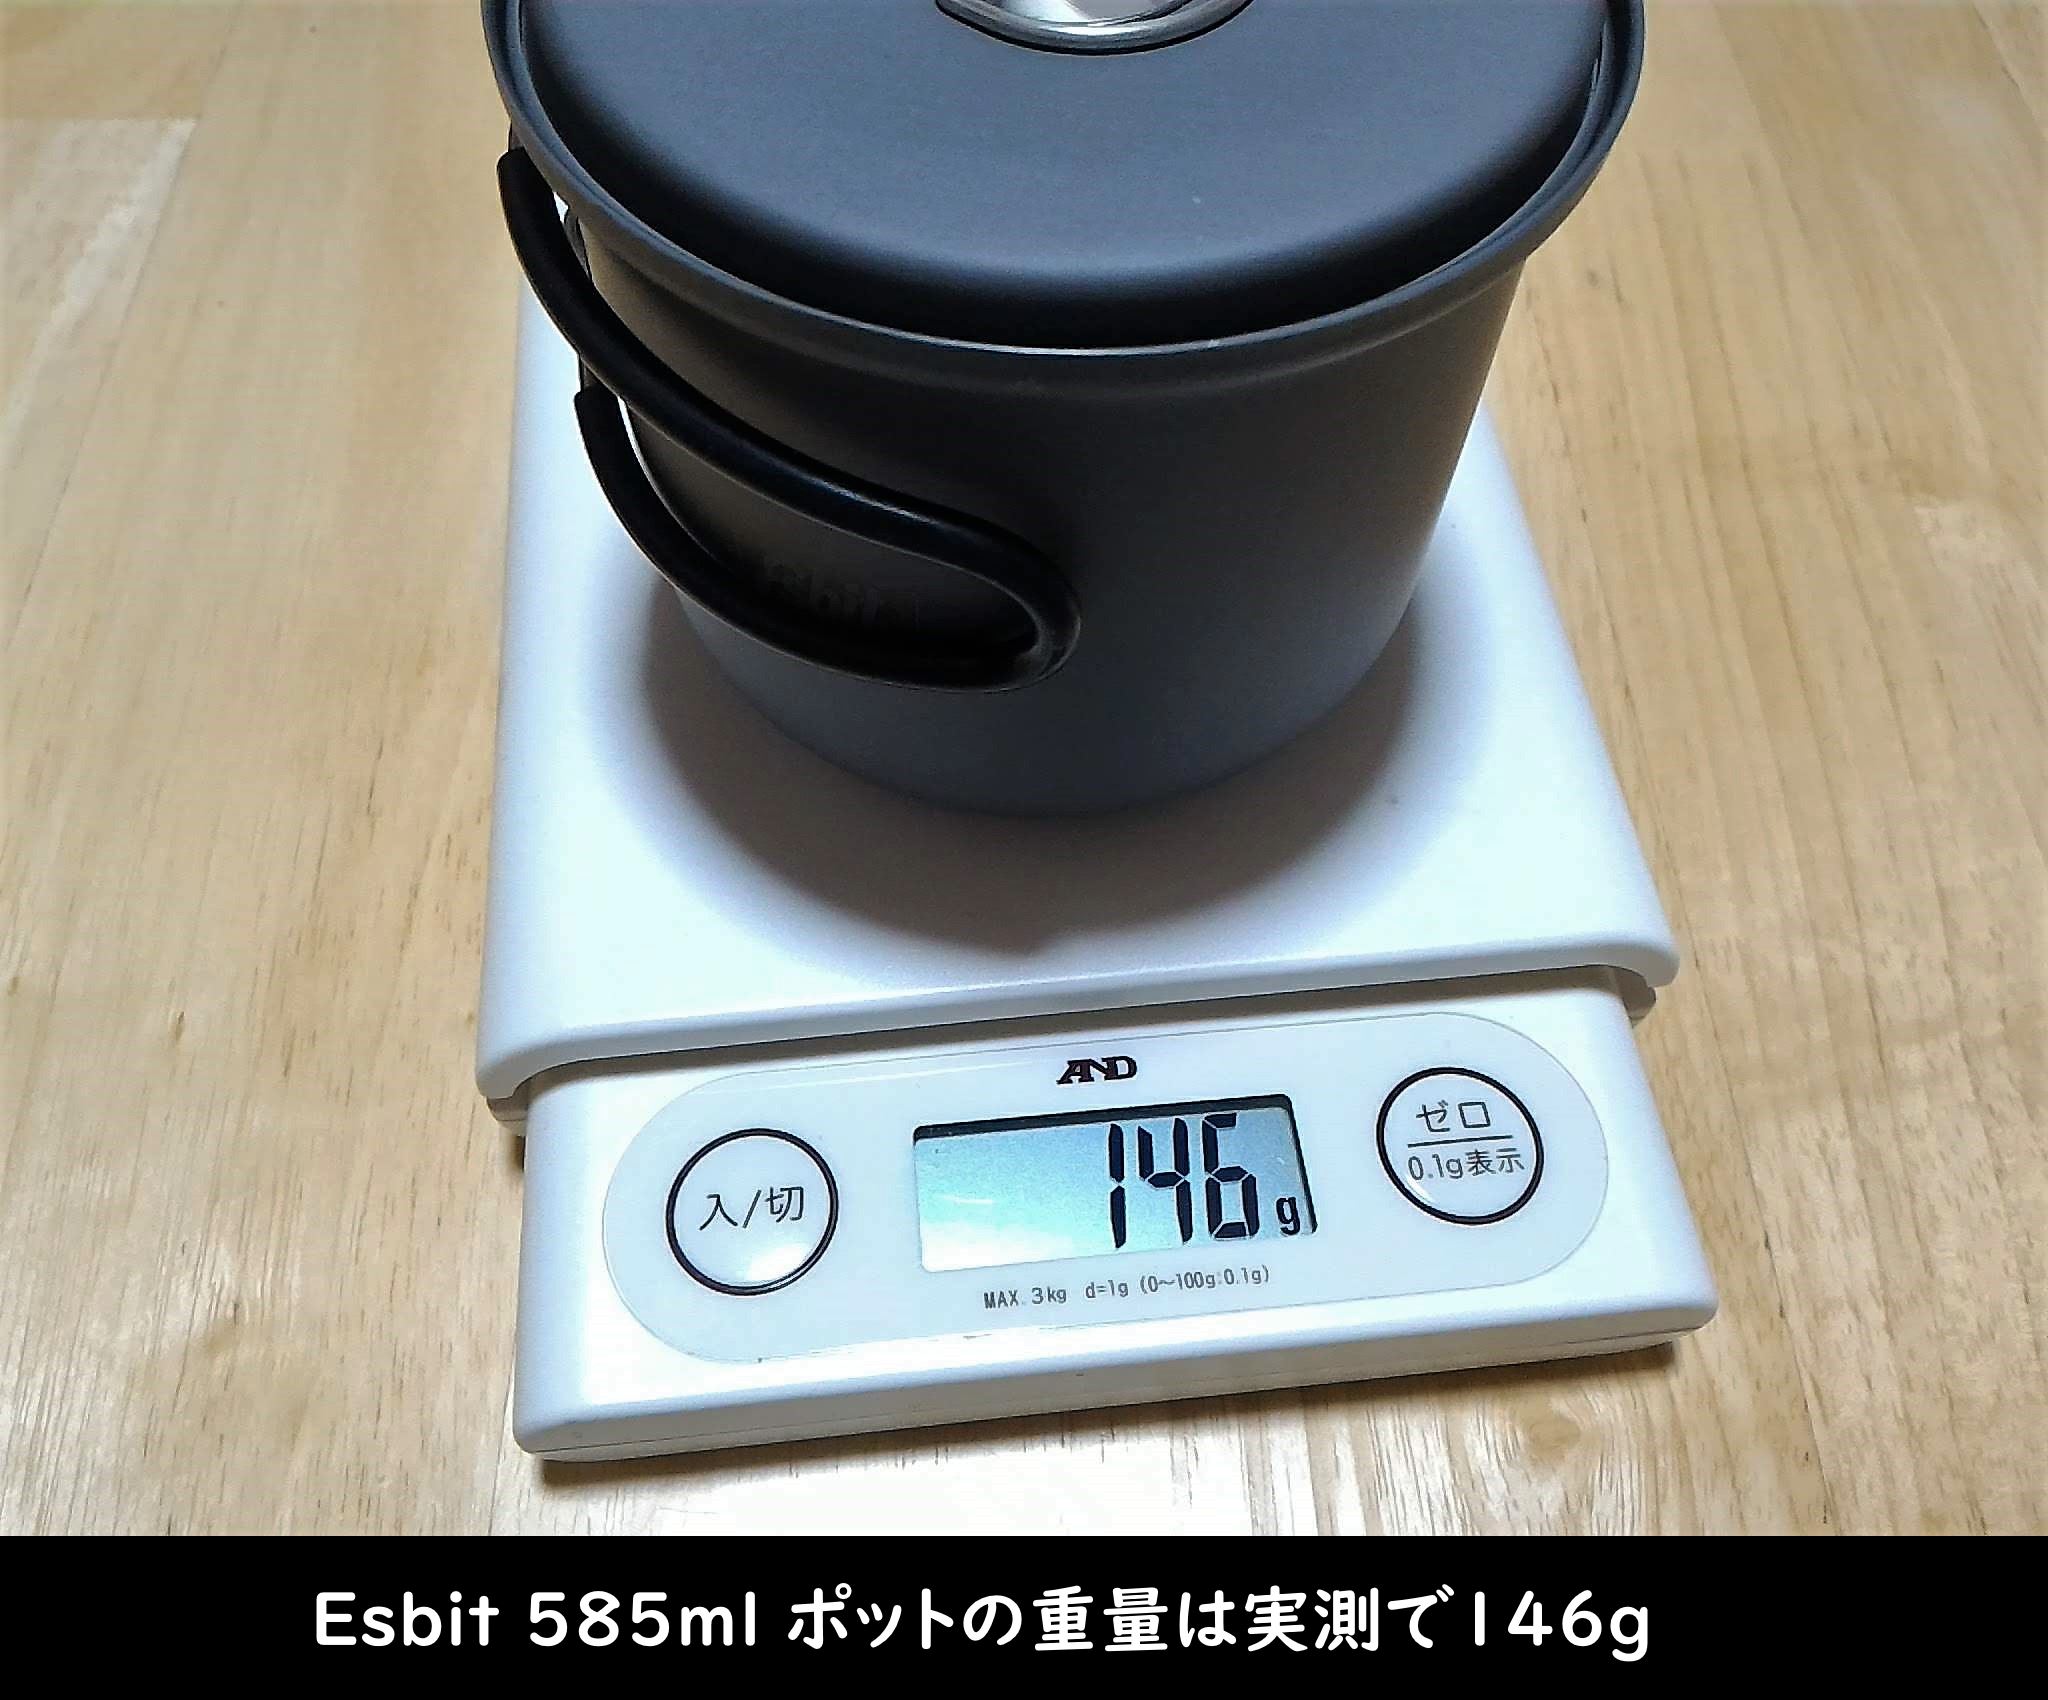 Esbit 585ml ポットの重量は実測で146g